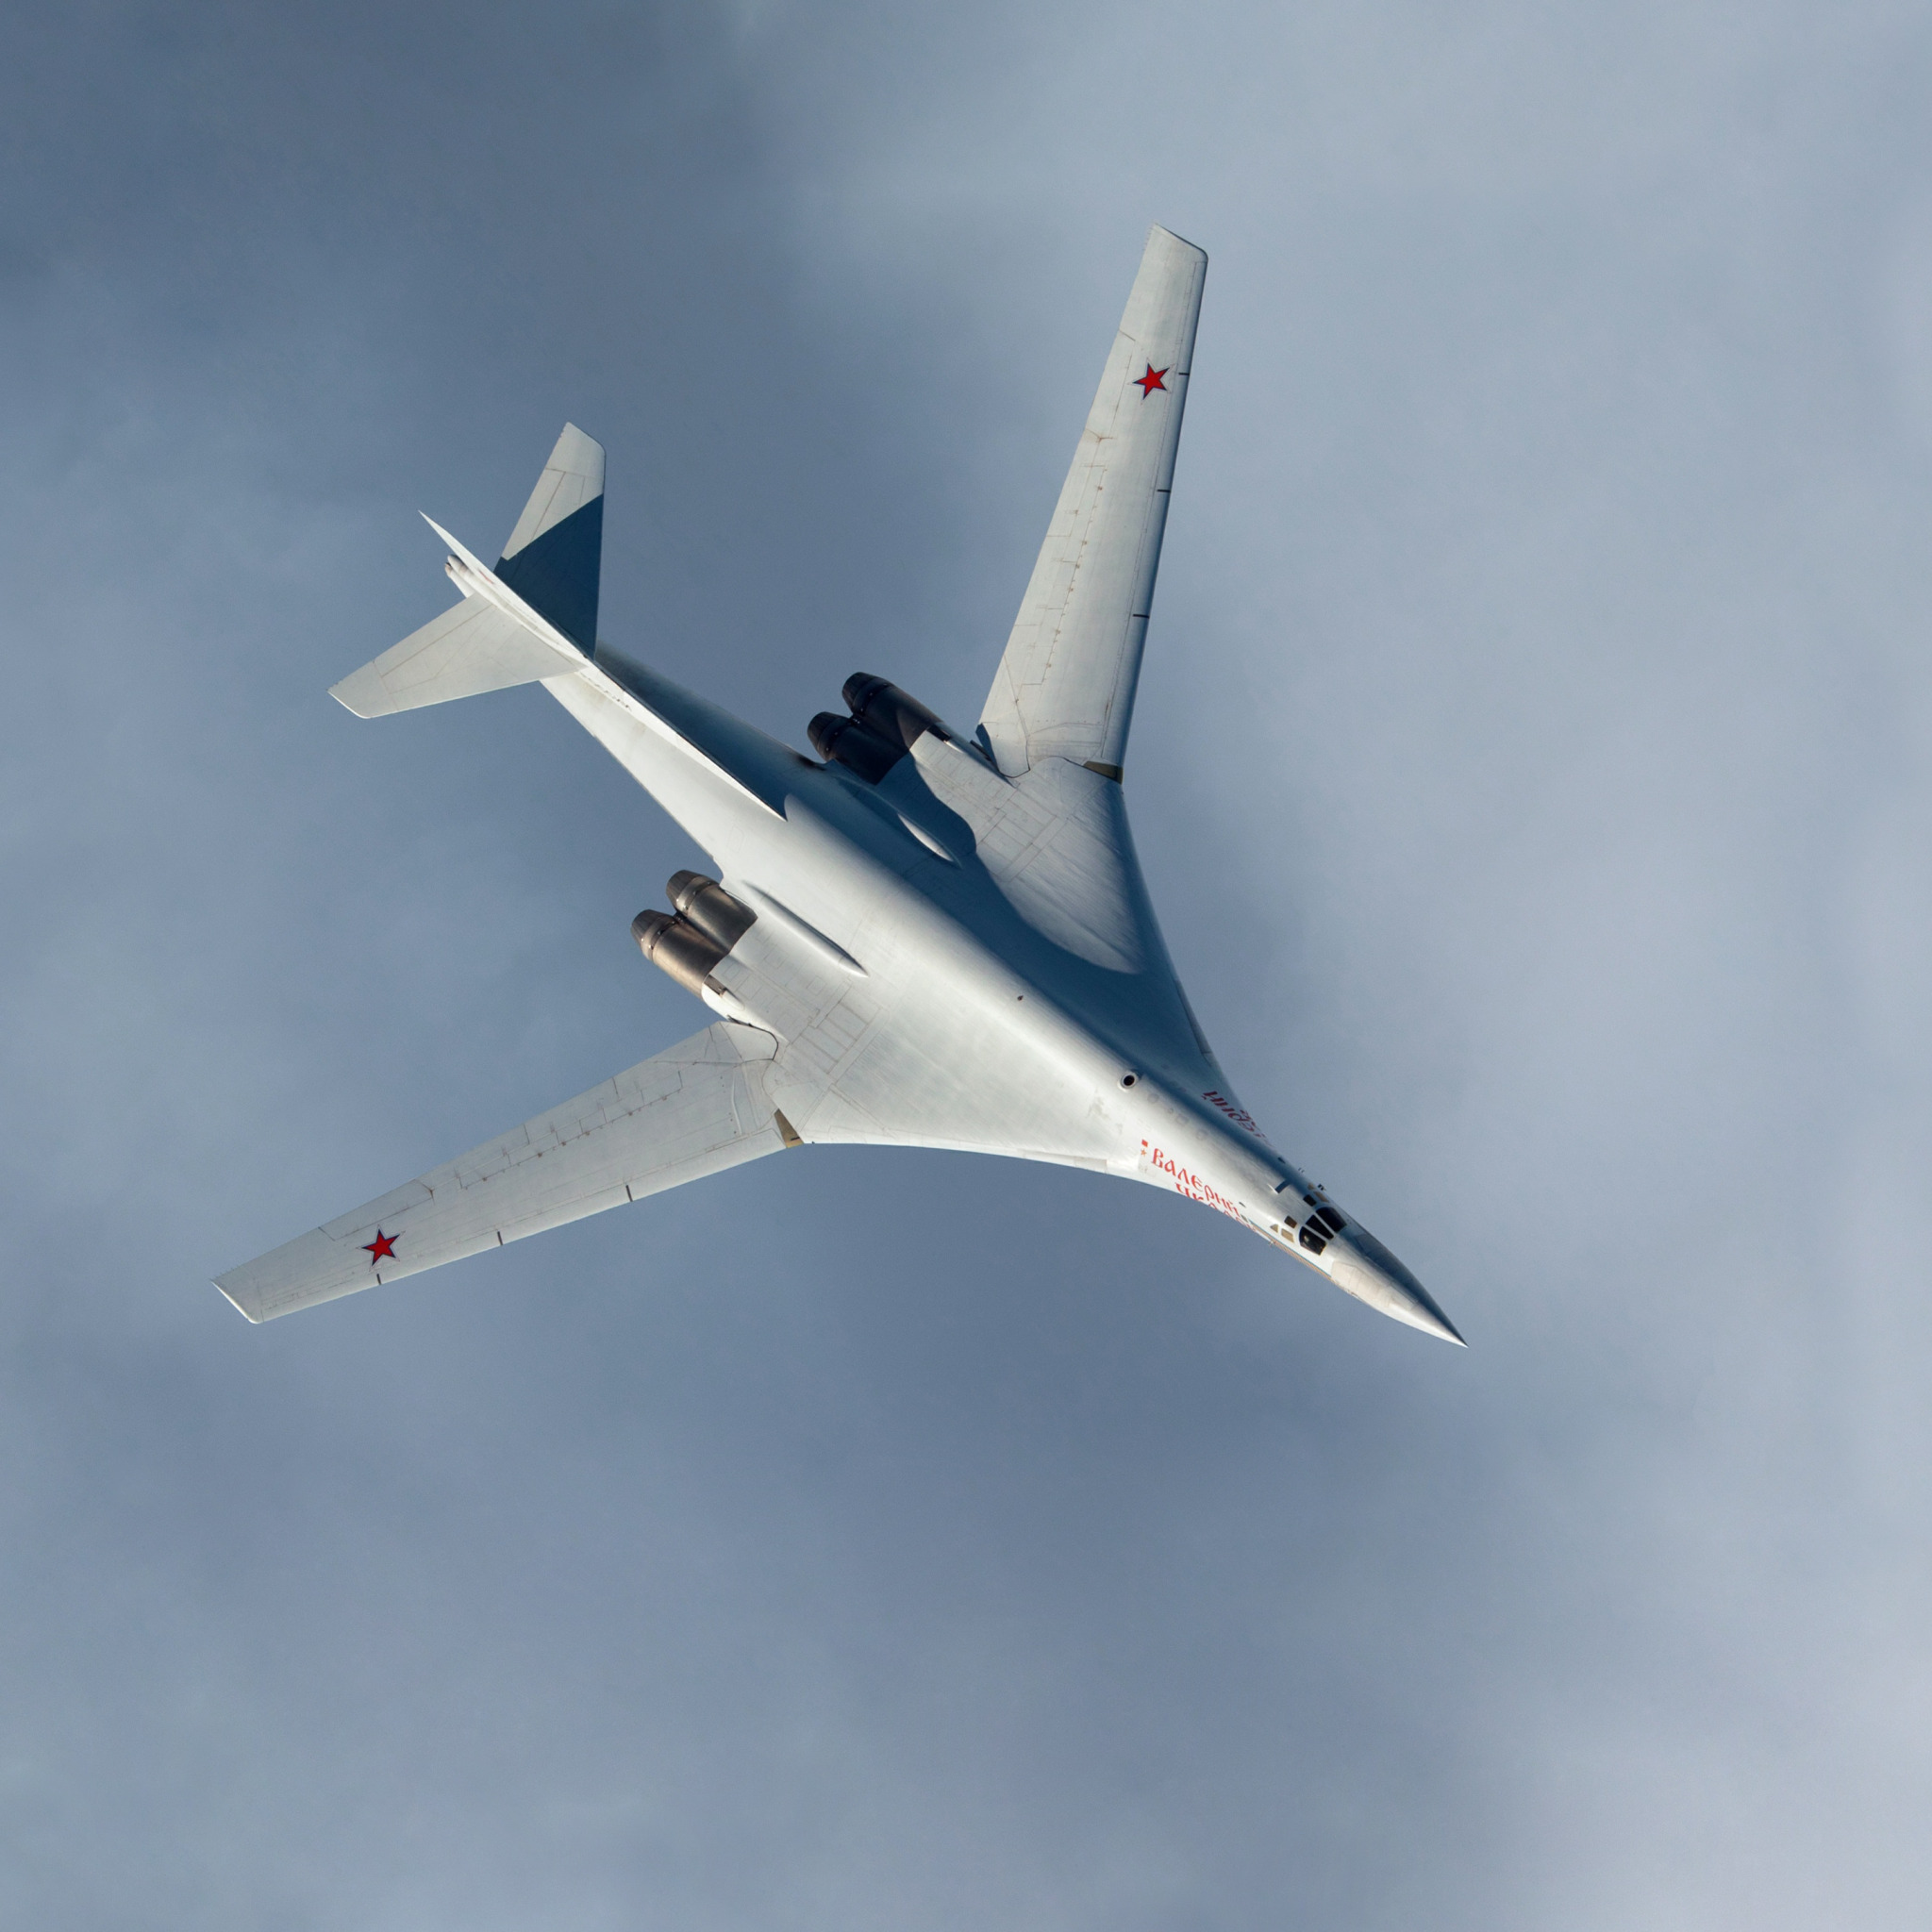 Kamazz белый лебедь. Ту-160 белый лебедь. Лебедь самолет ту 160. Стратегический бомбардировщик белый лебедь. Истребитель ту 160 белый лебедь.